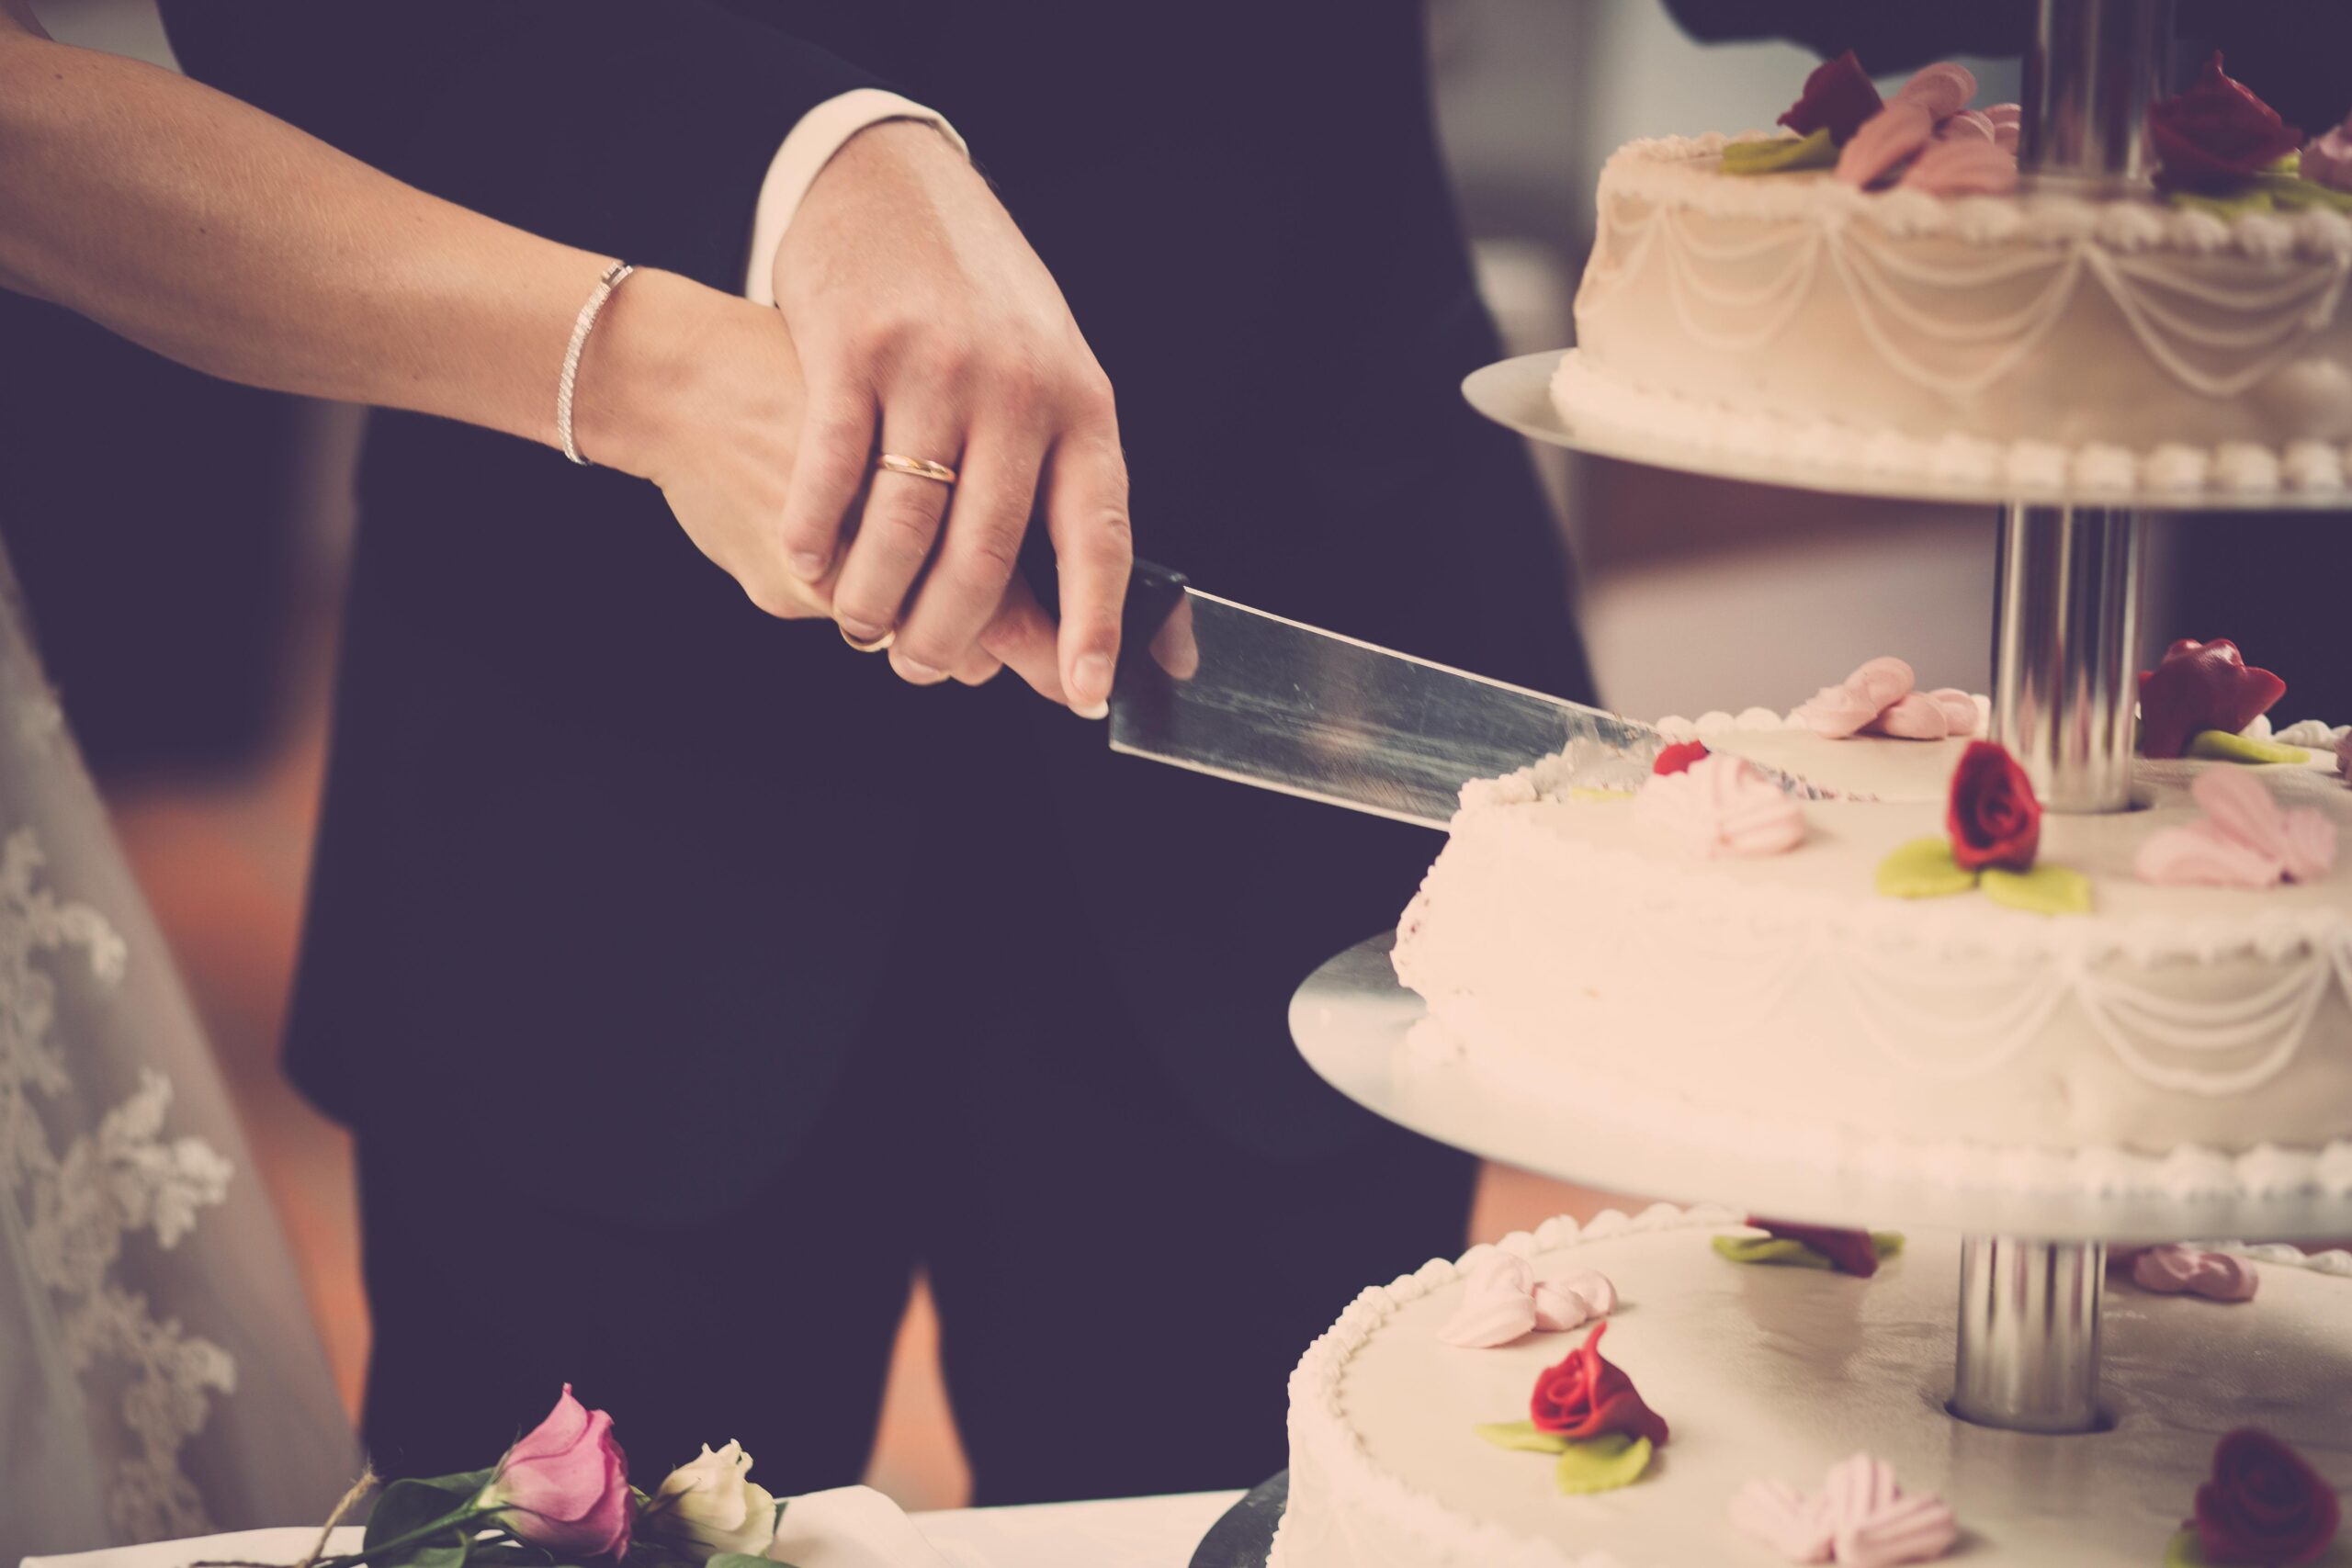 Man and wife cutting their wedding cake.